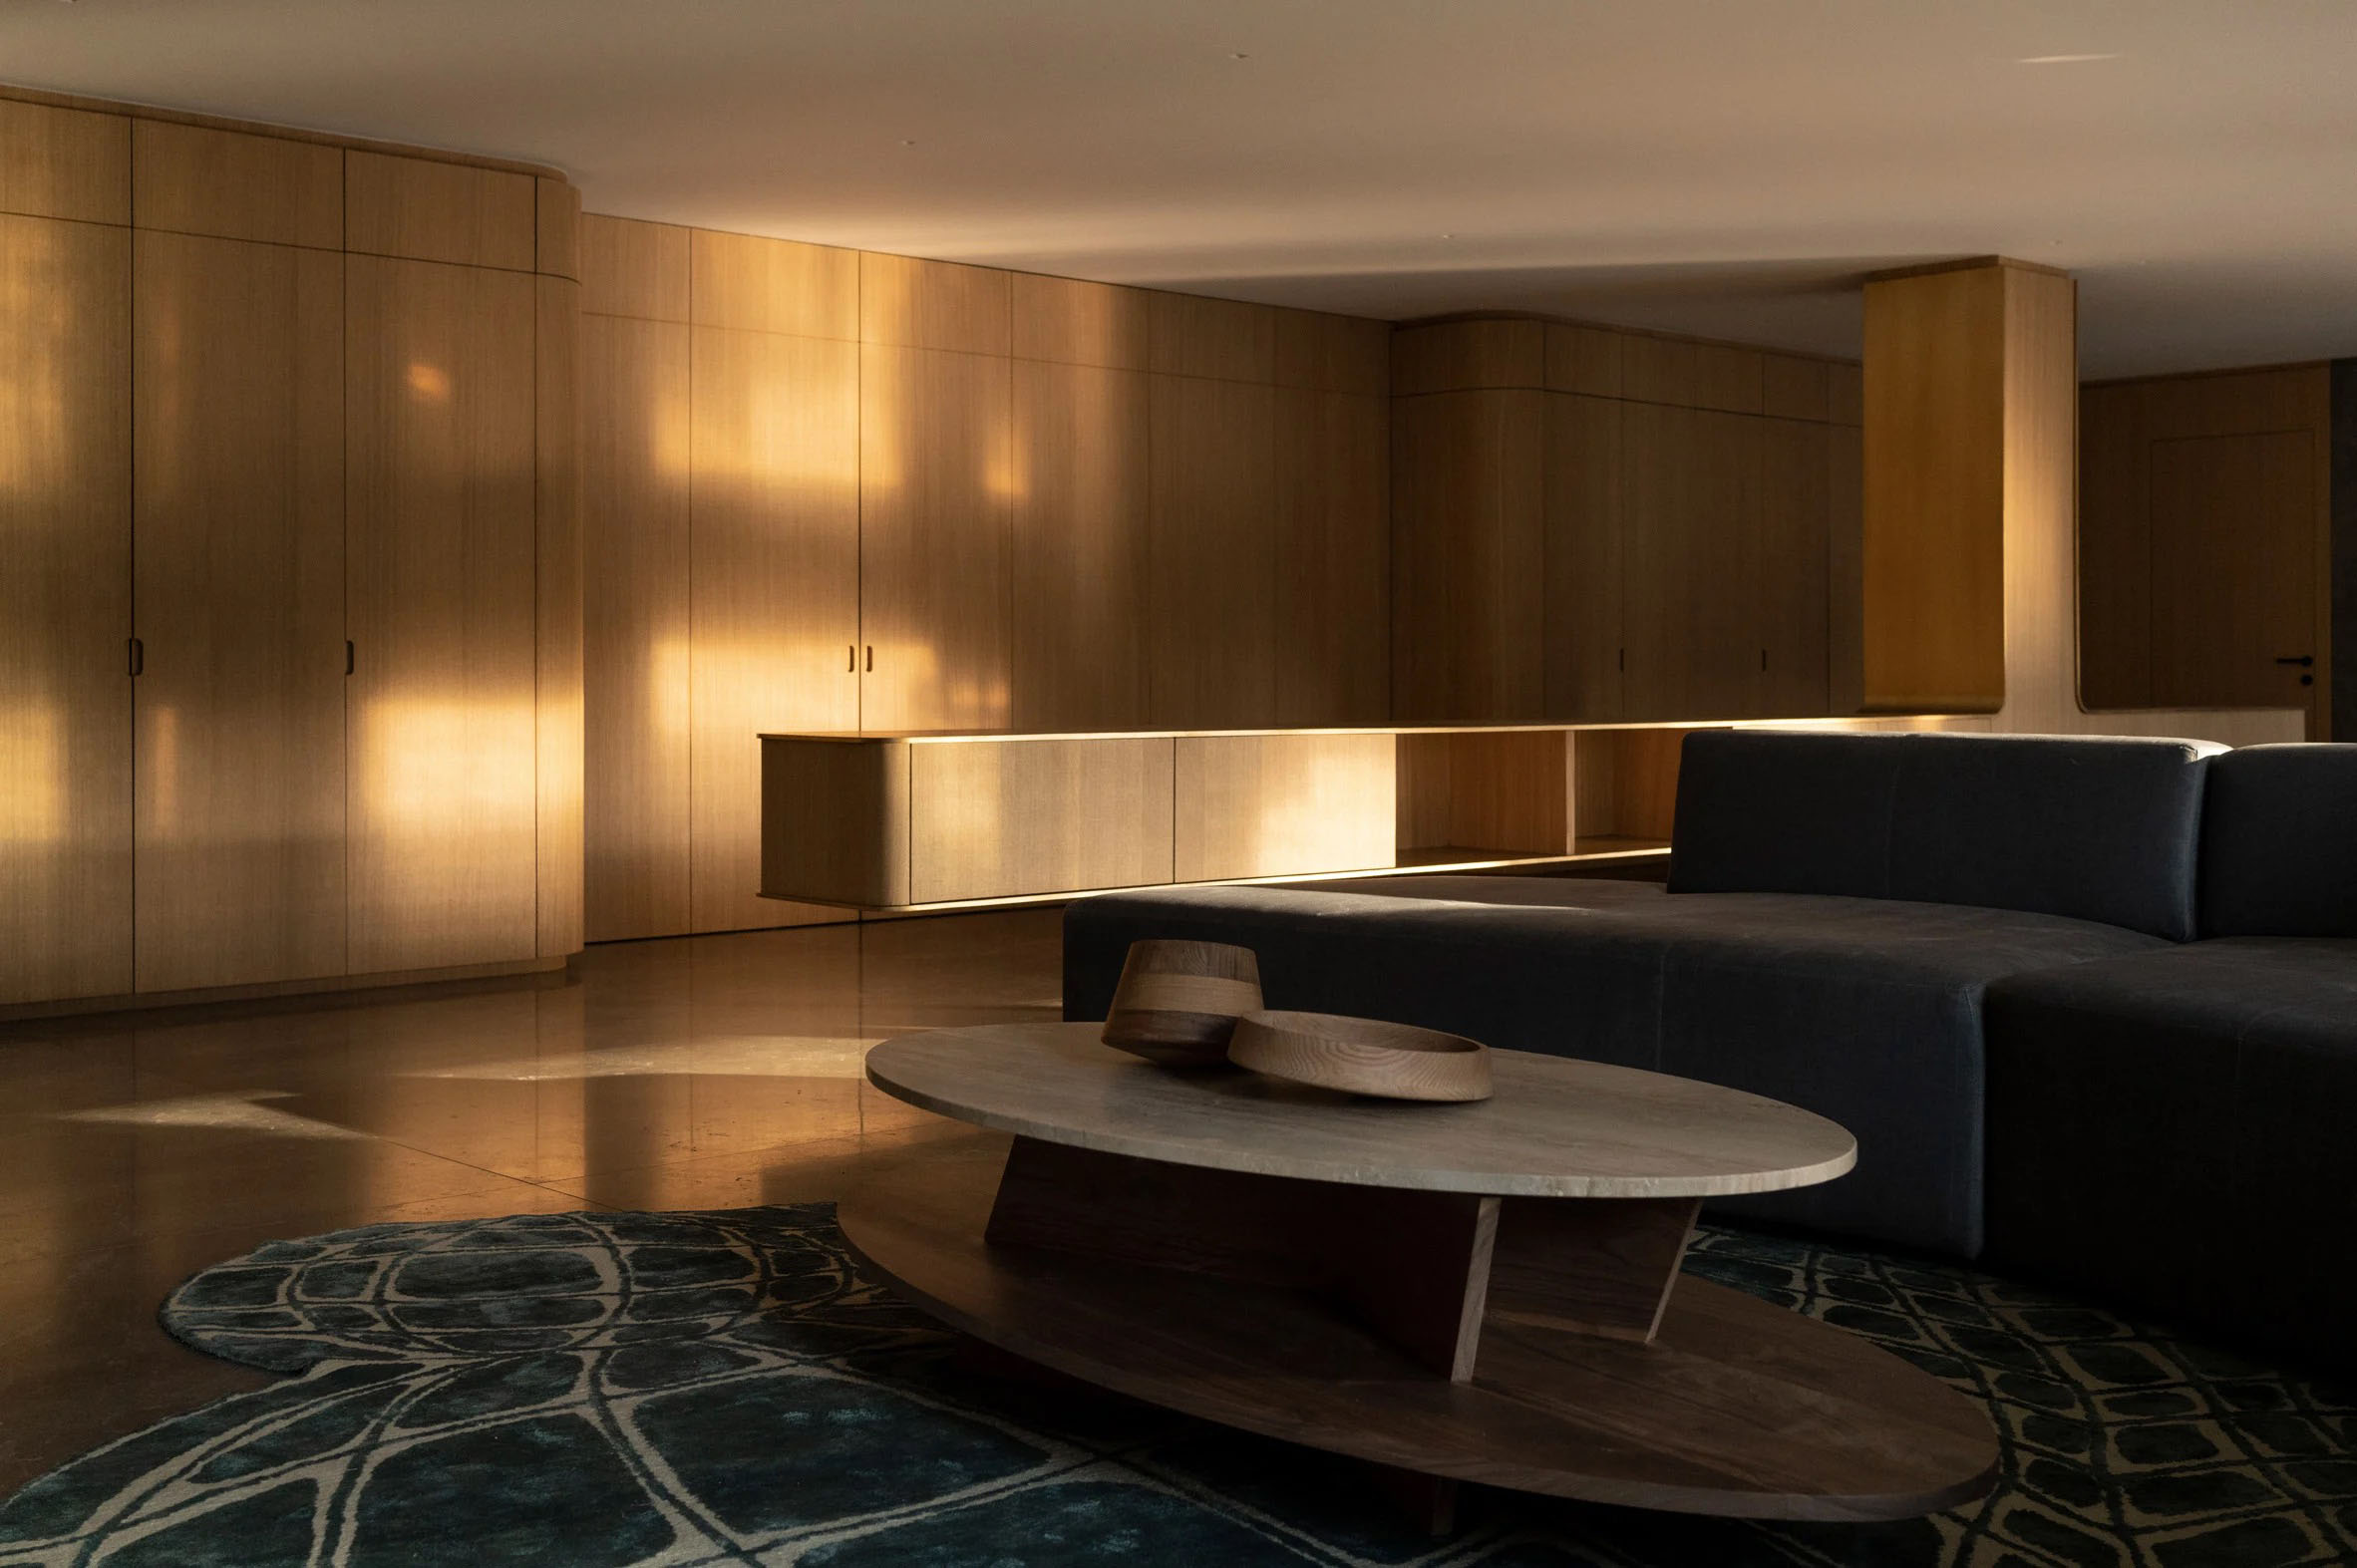 Hector Esrawe,墨西哥,公寓設計,家裝設計,公寓設計案例,原木色,極簡風格,單身公寓